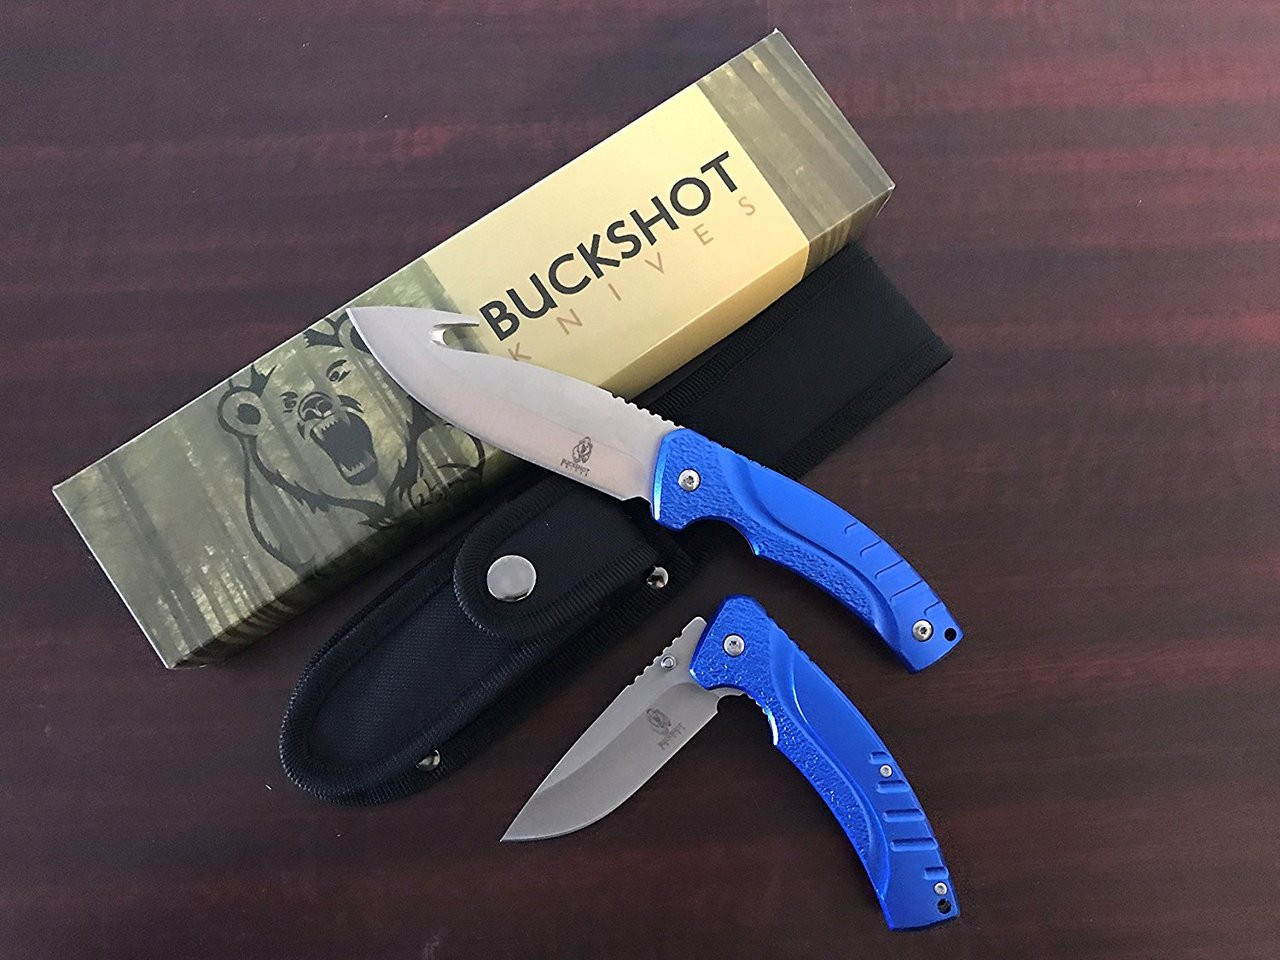 Buckshot Knives Full tang camping hunting knife & pocket knife set